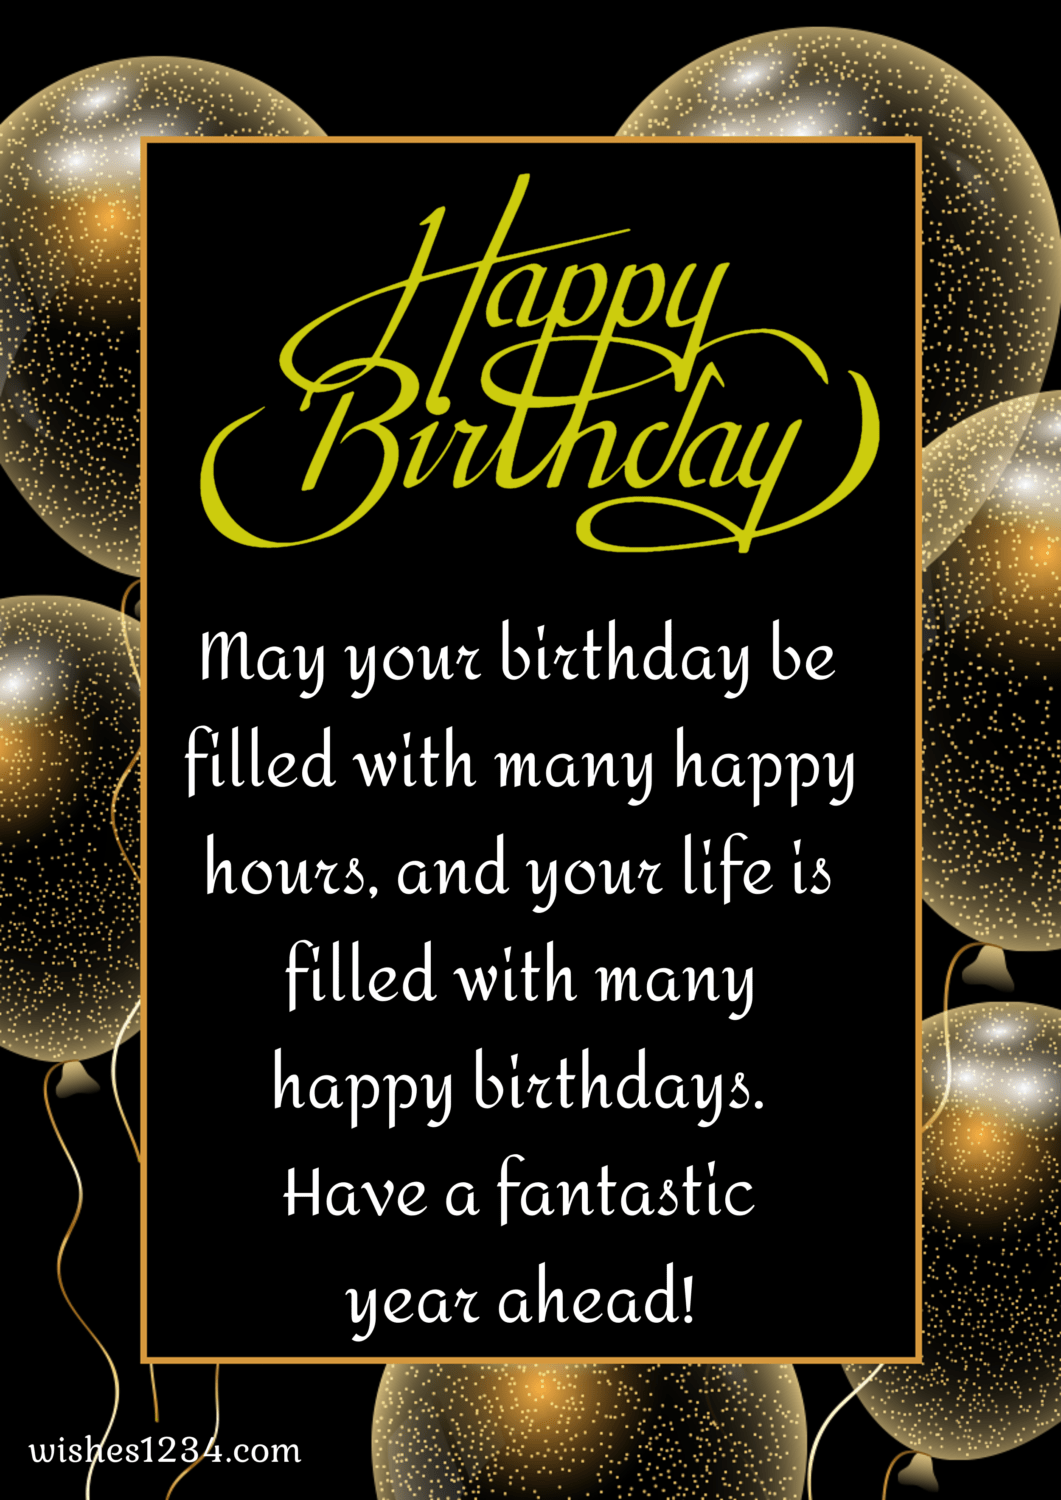 Golden sparkling balloons, Happy Birthday wishes.